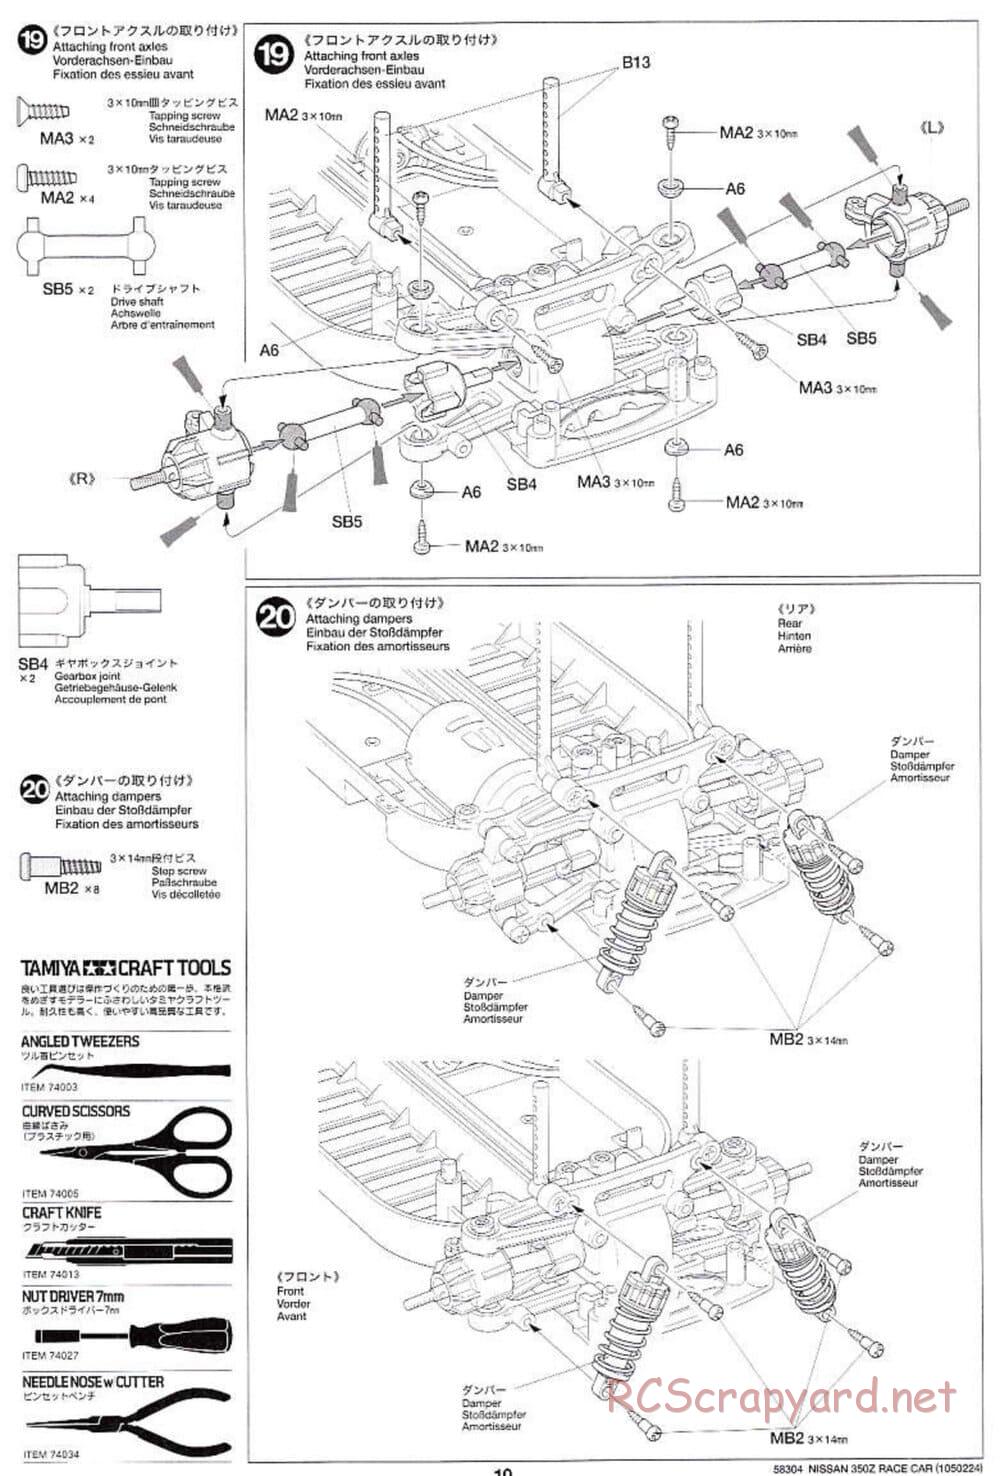 Tamiya - Nissan 350Z Race-Car - TT-01 Chassis - Manual - Page 10